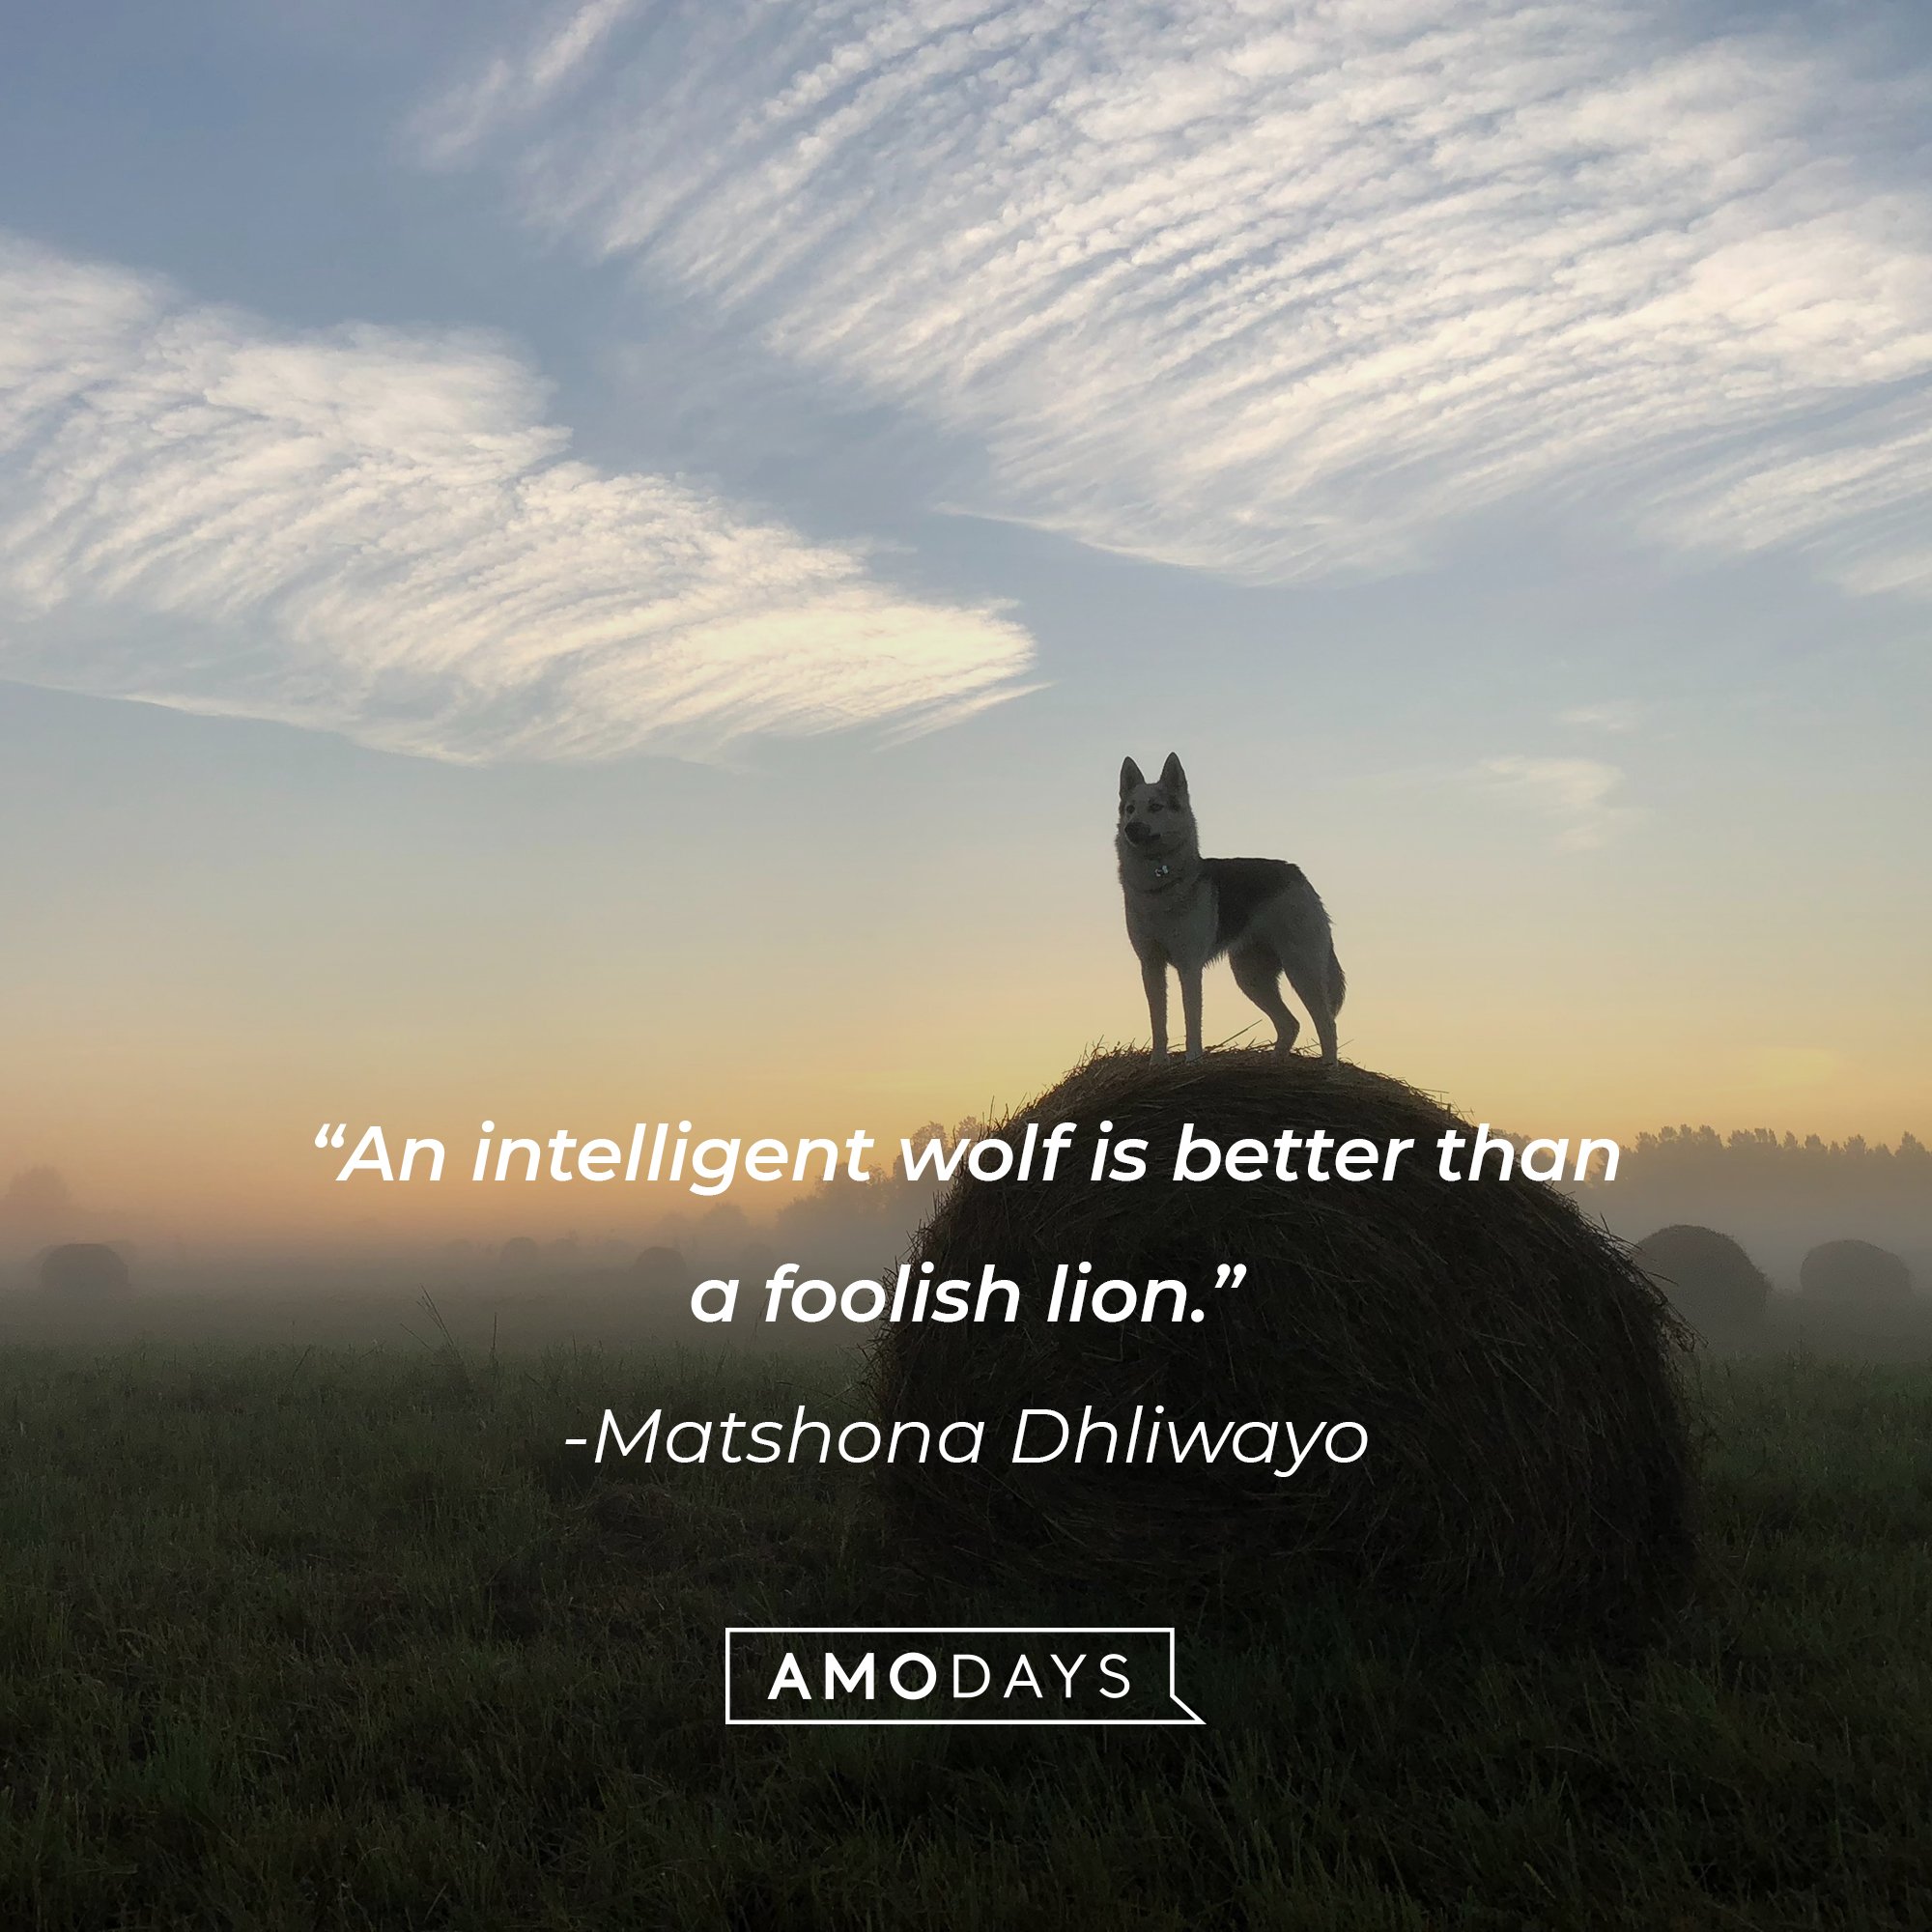  Matshona Dhliwayo's quote: “An intelligent wolf is better than a foolish lion.” | Image: AmoDays